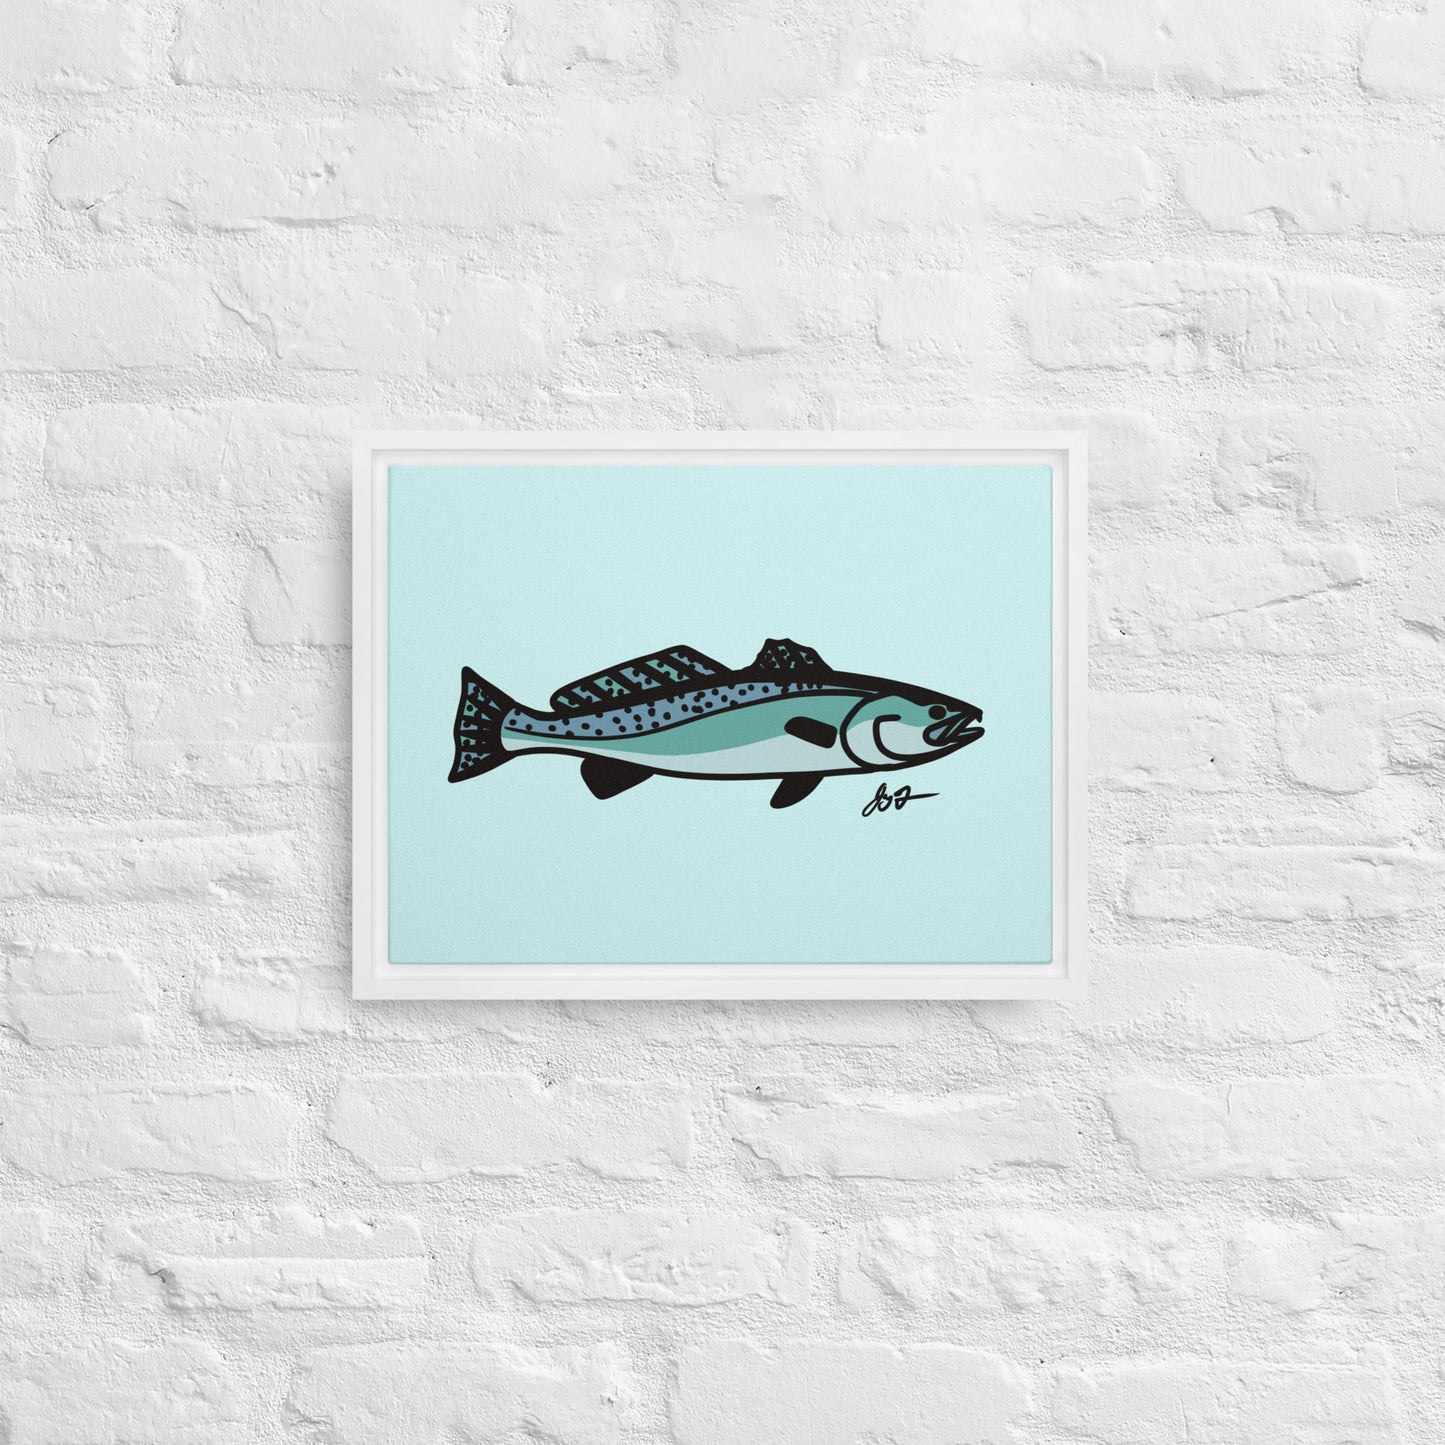 Sea Trout Wall Art: Framed Canvas Print